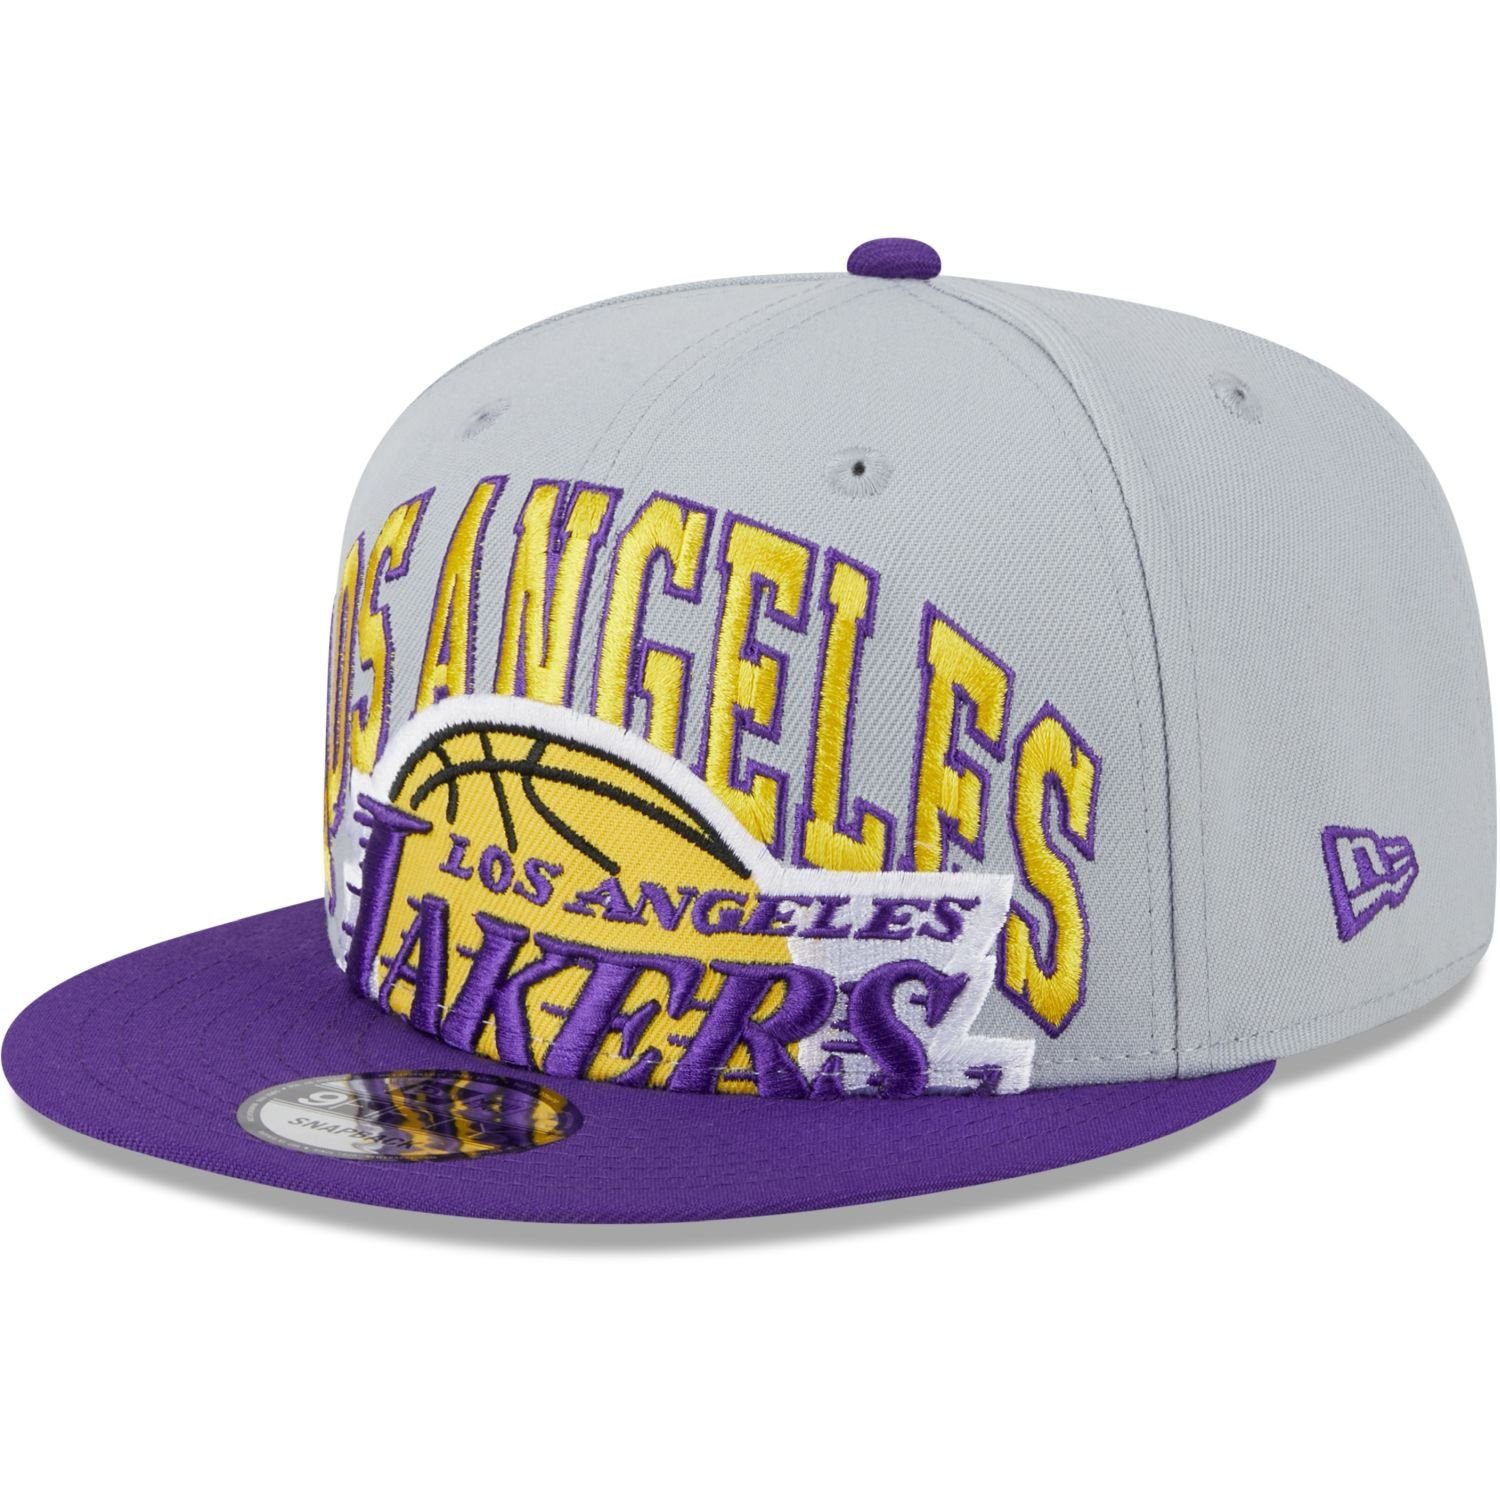 New Era Snapback Cap 9FIFTY NBA TIPOFF Los Angeles Lakers